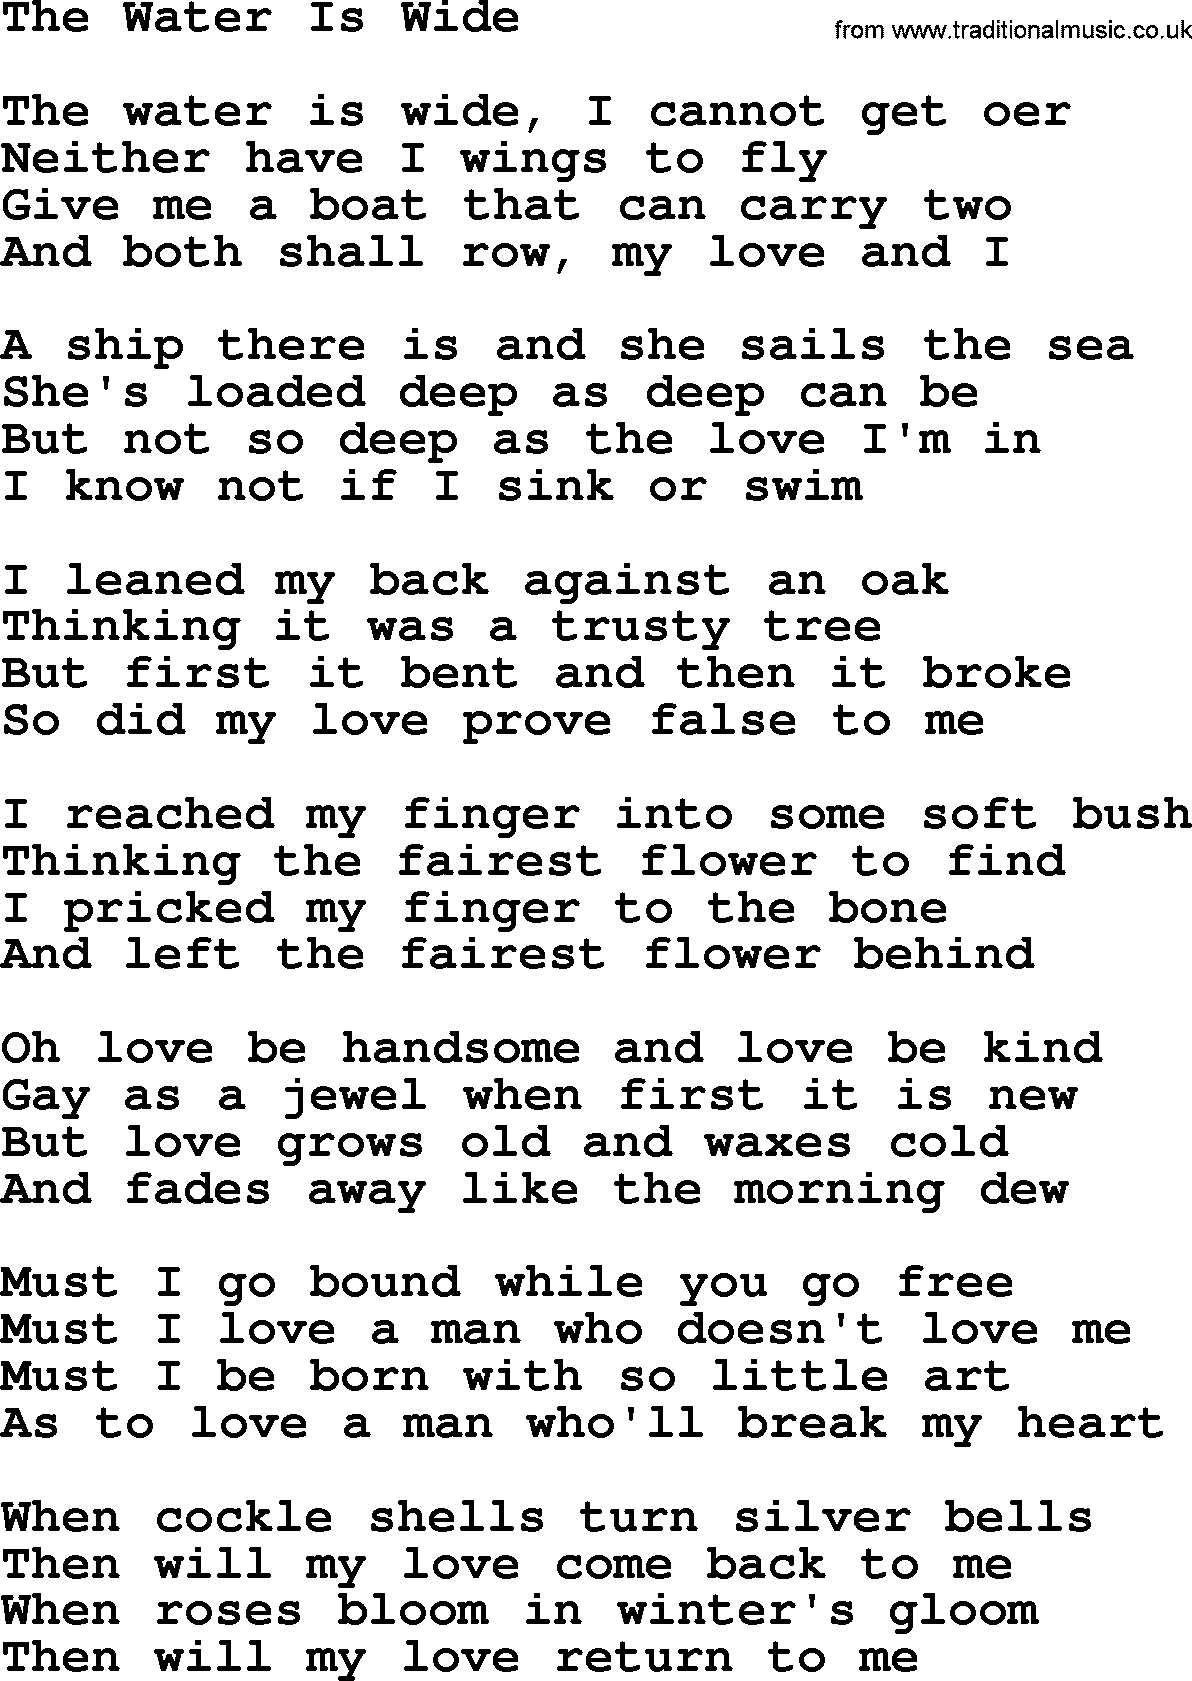 Joan Baez song The Water Is Wide, lyrics